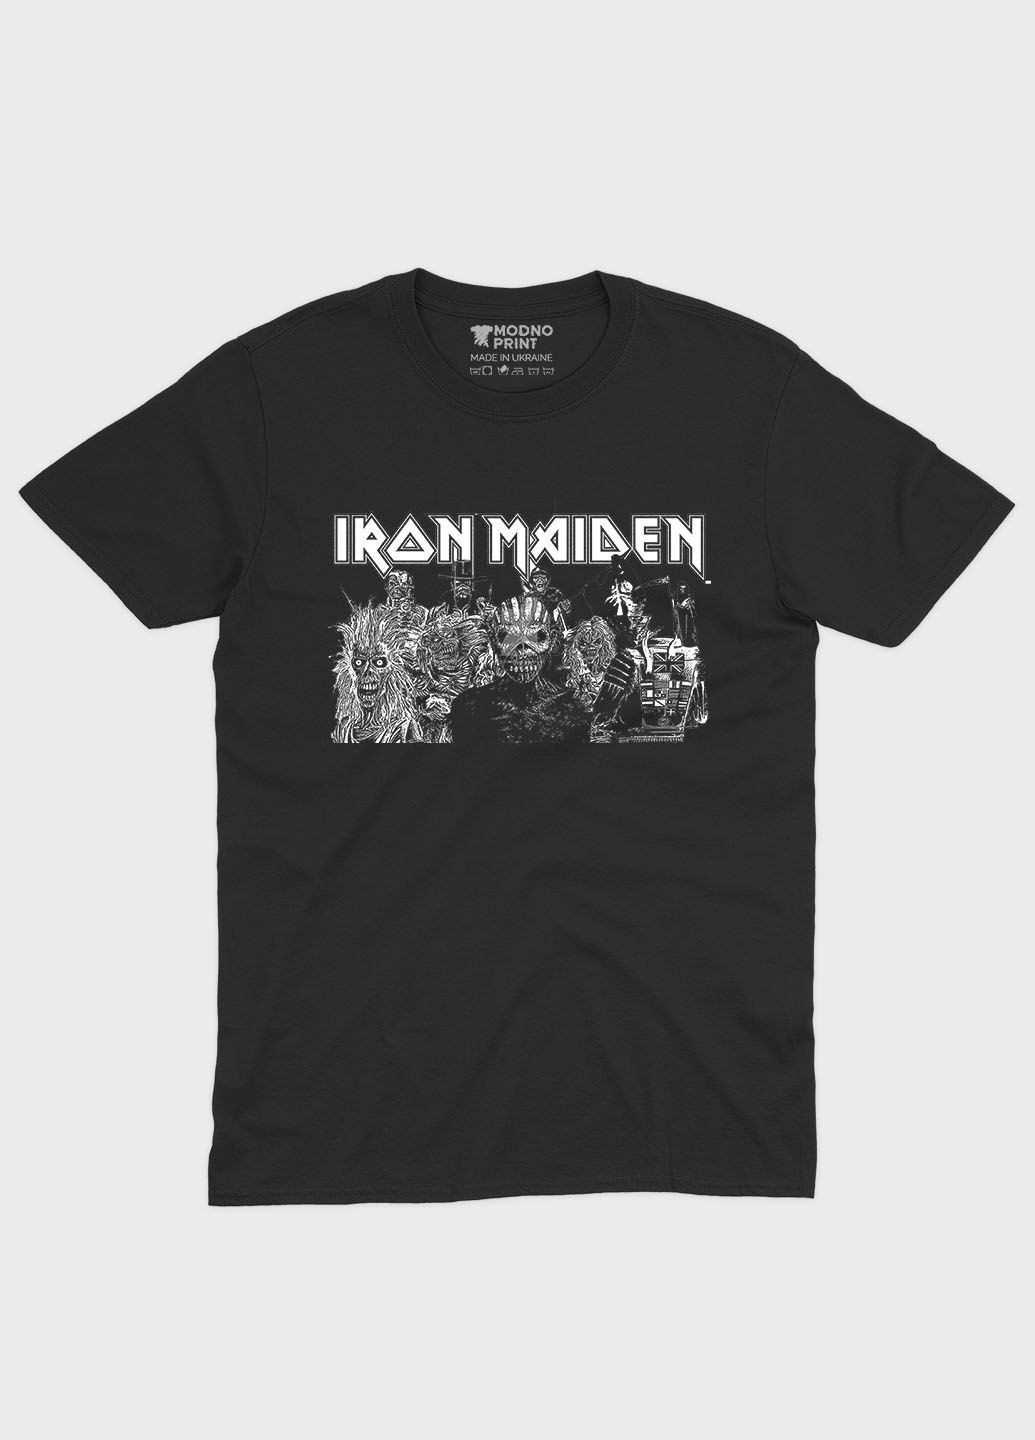 Чорна чоловіча футболка odno з рок принтом "iron maiden" m (ts001-2-bl-004-2-145) Modno